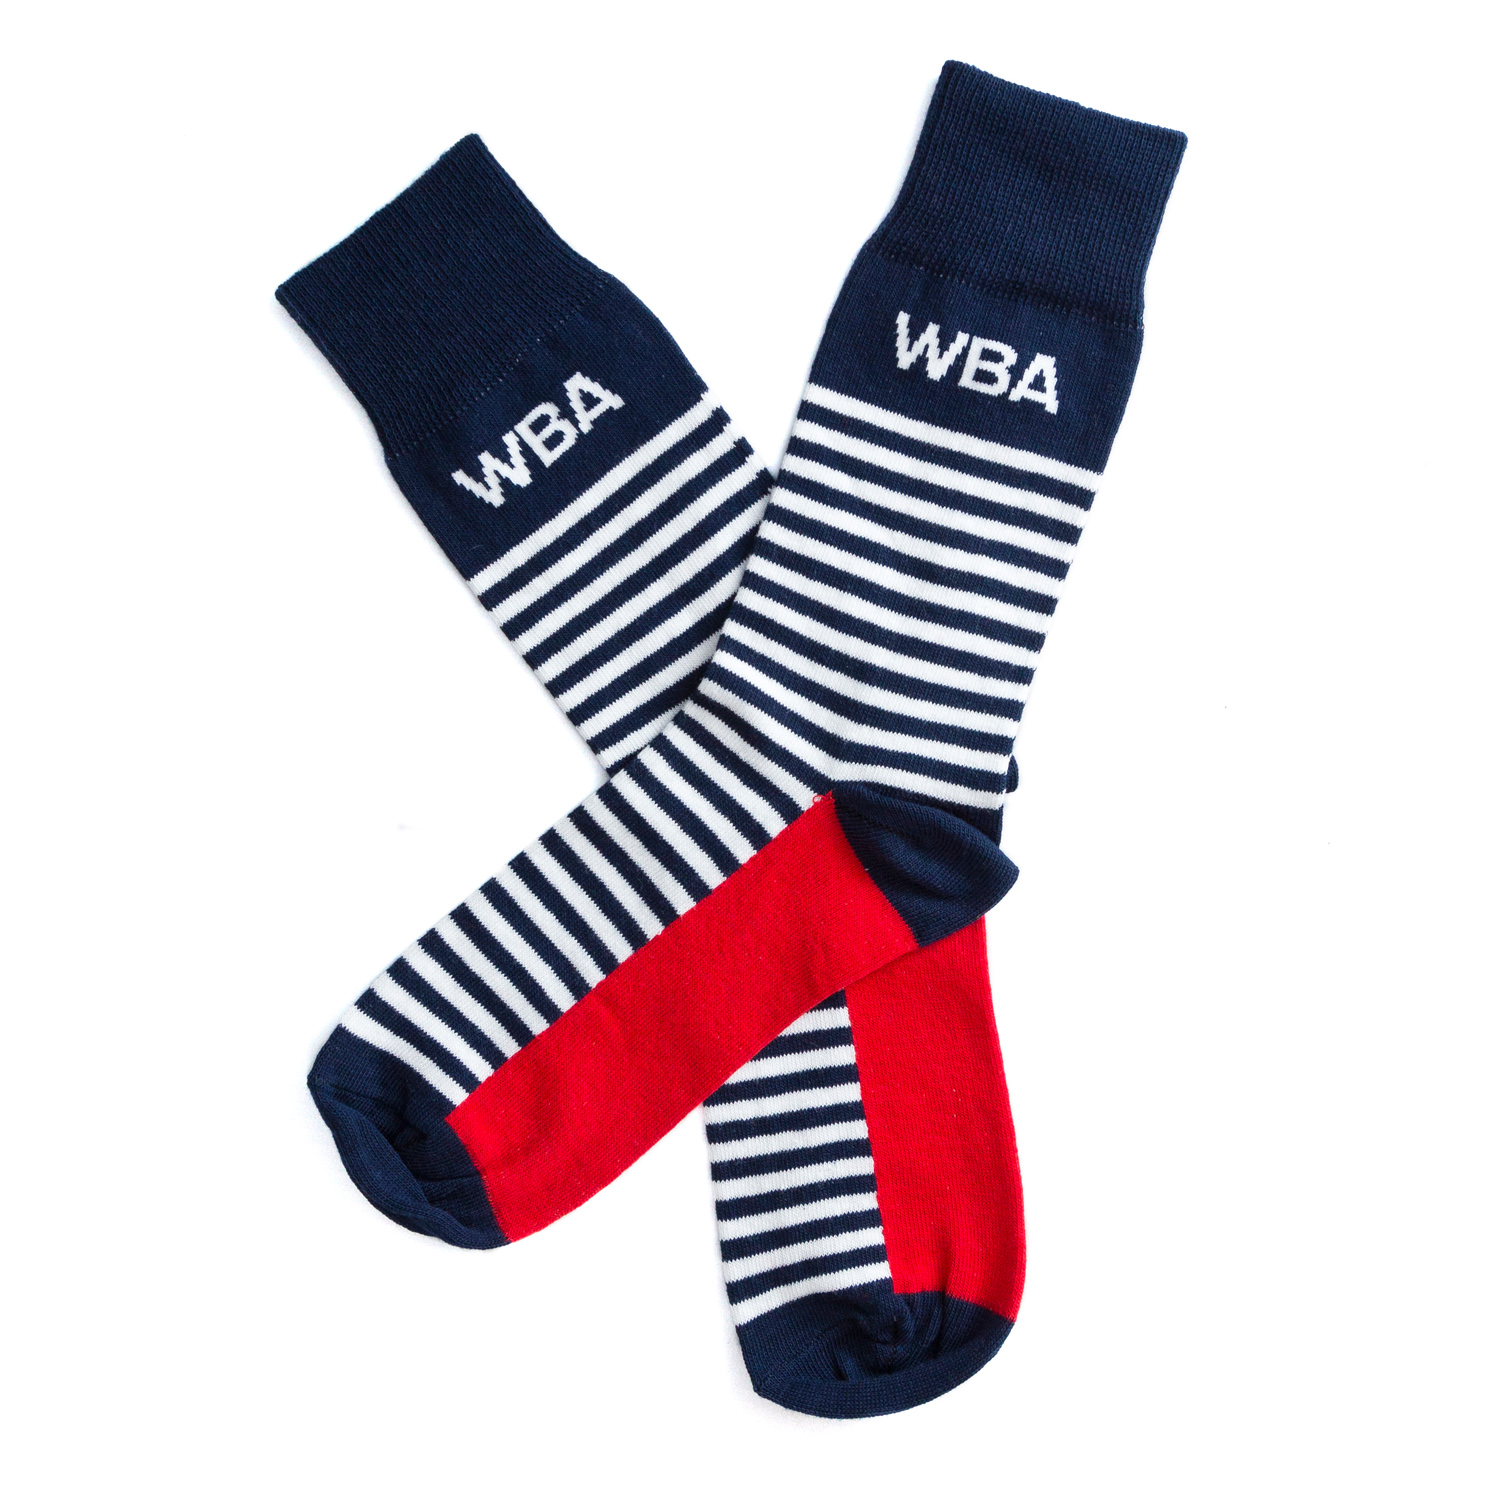 WBA Colour Stripe Socks